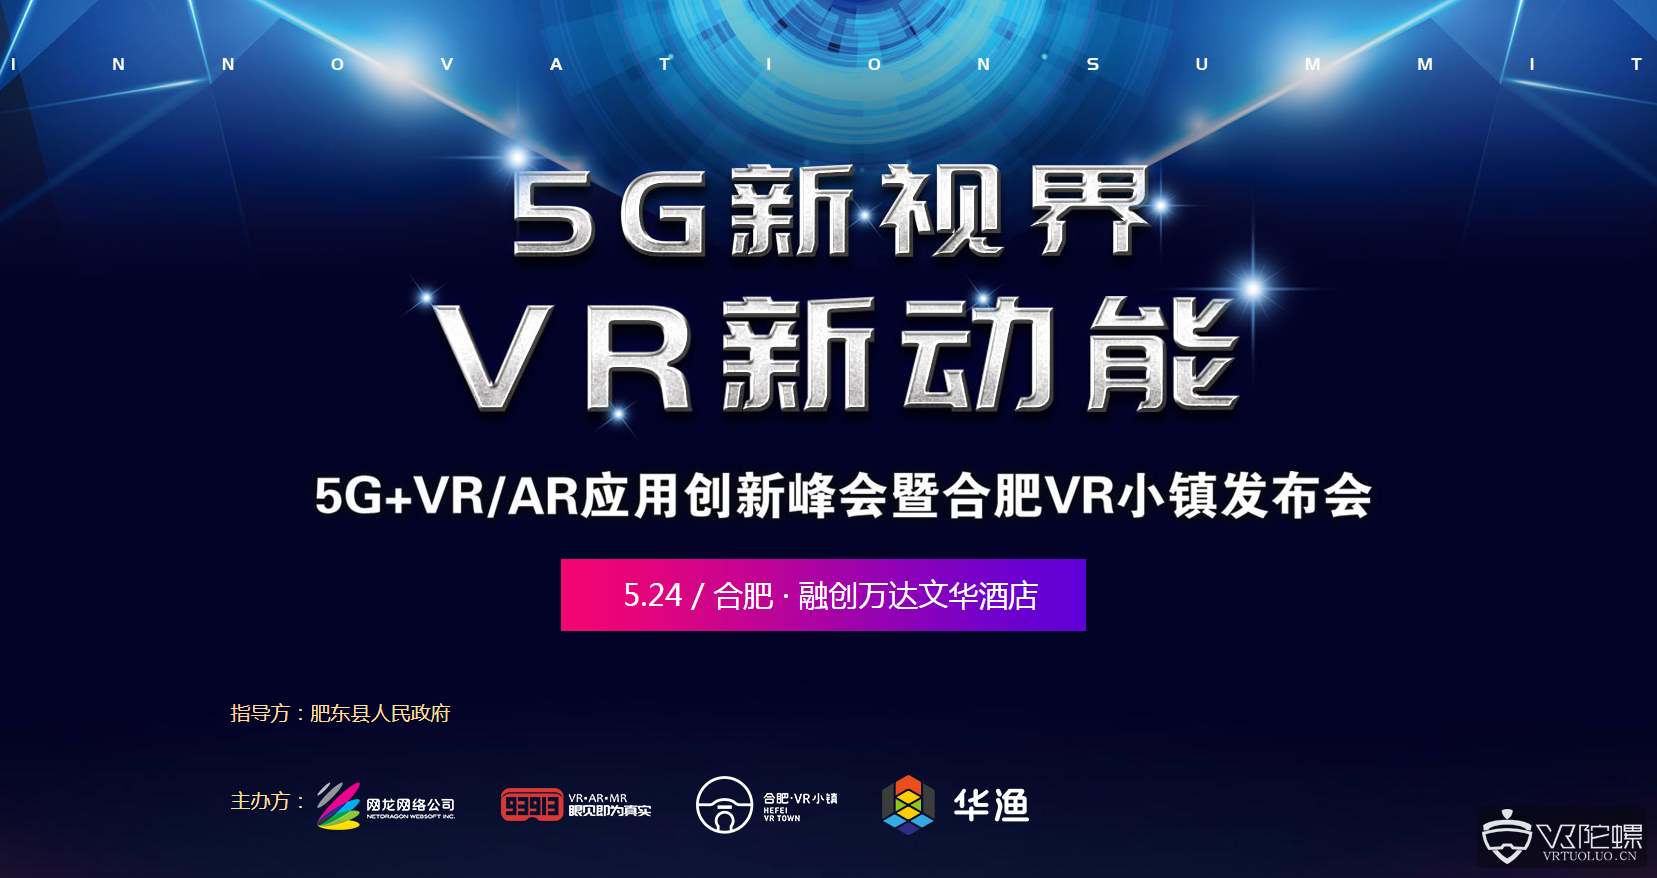 5G+VR/AR应用创新峰会暨合肥VR小镇发布会即将召开